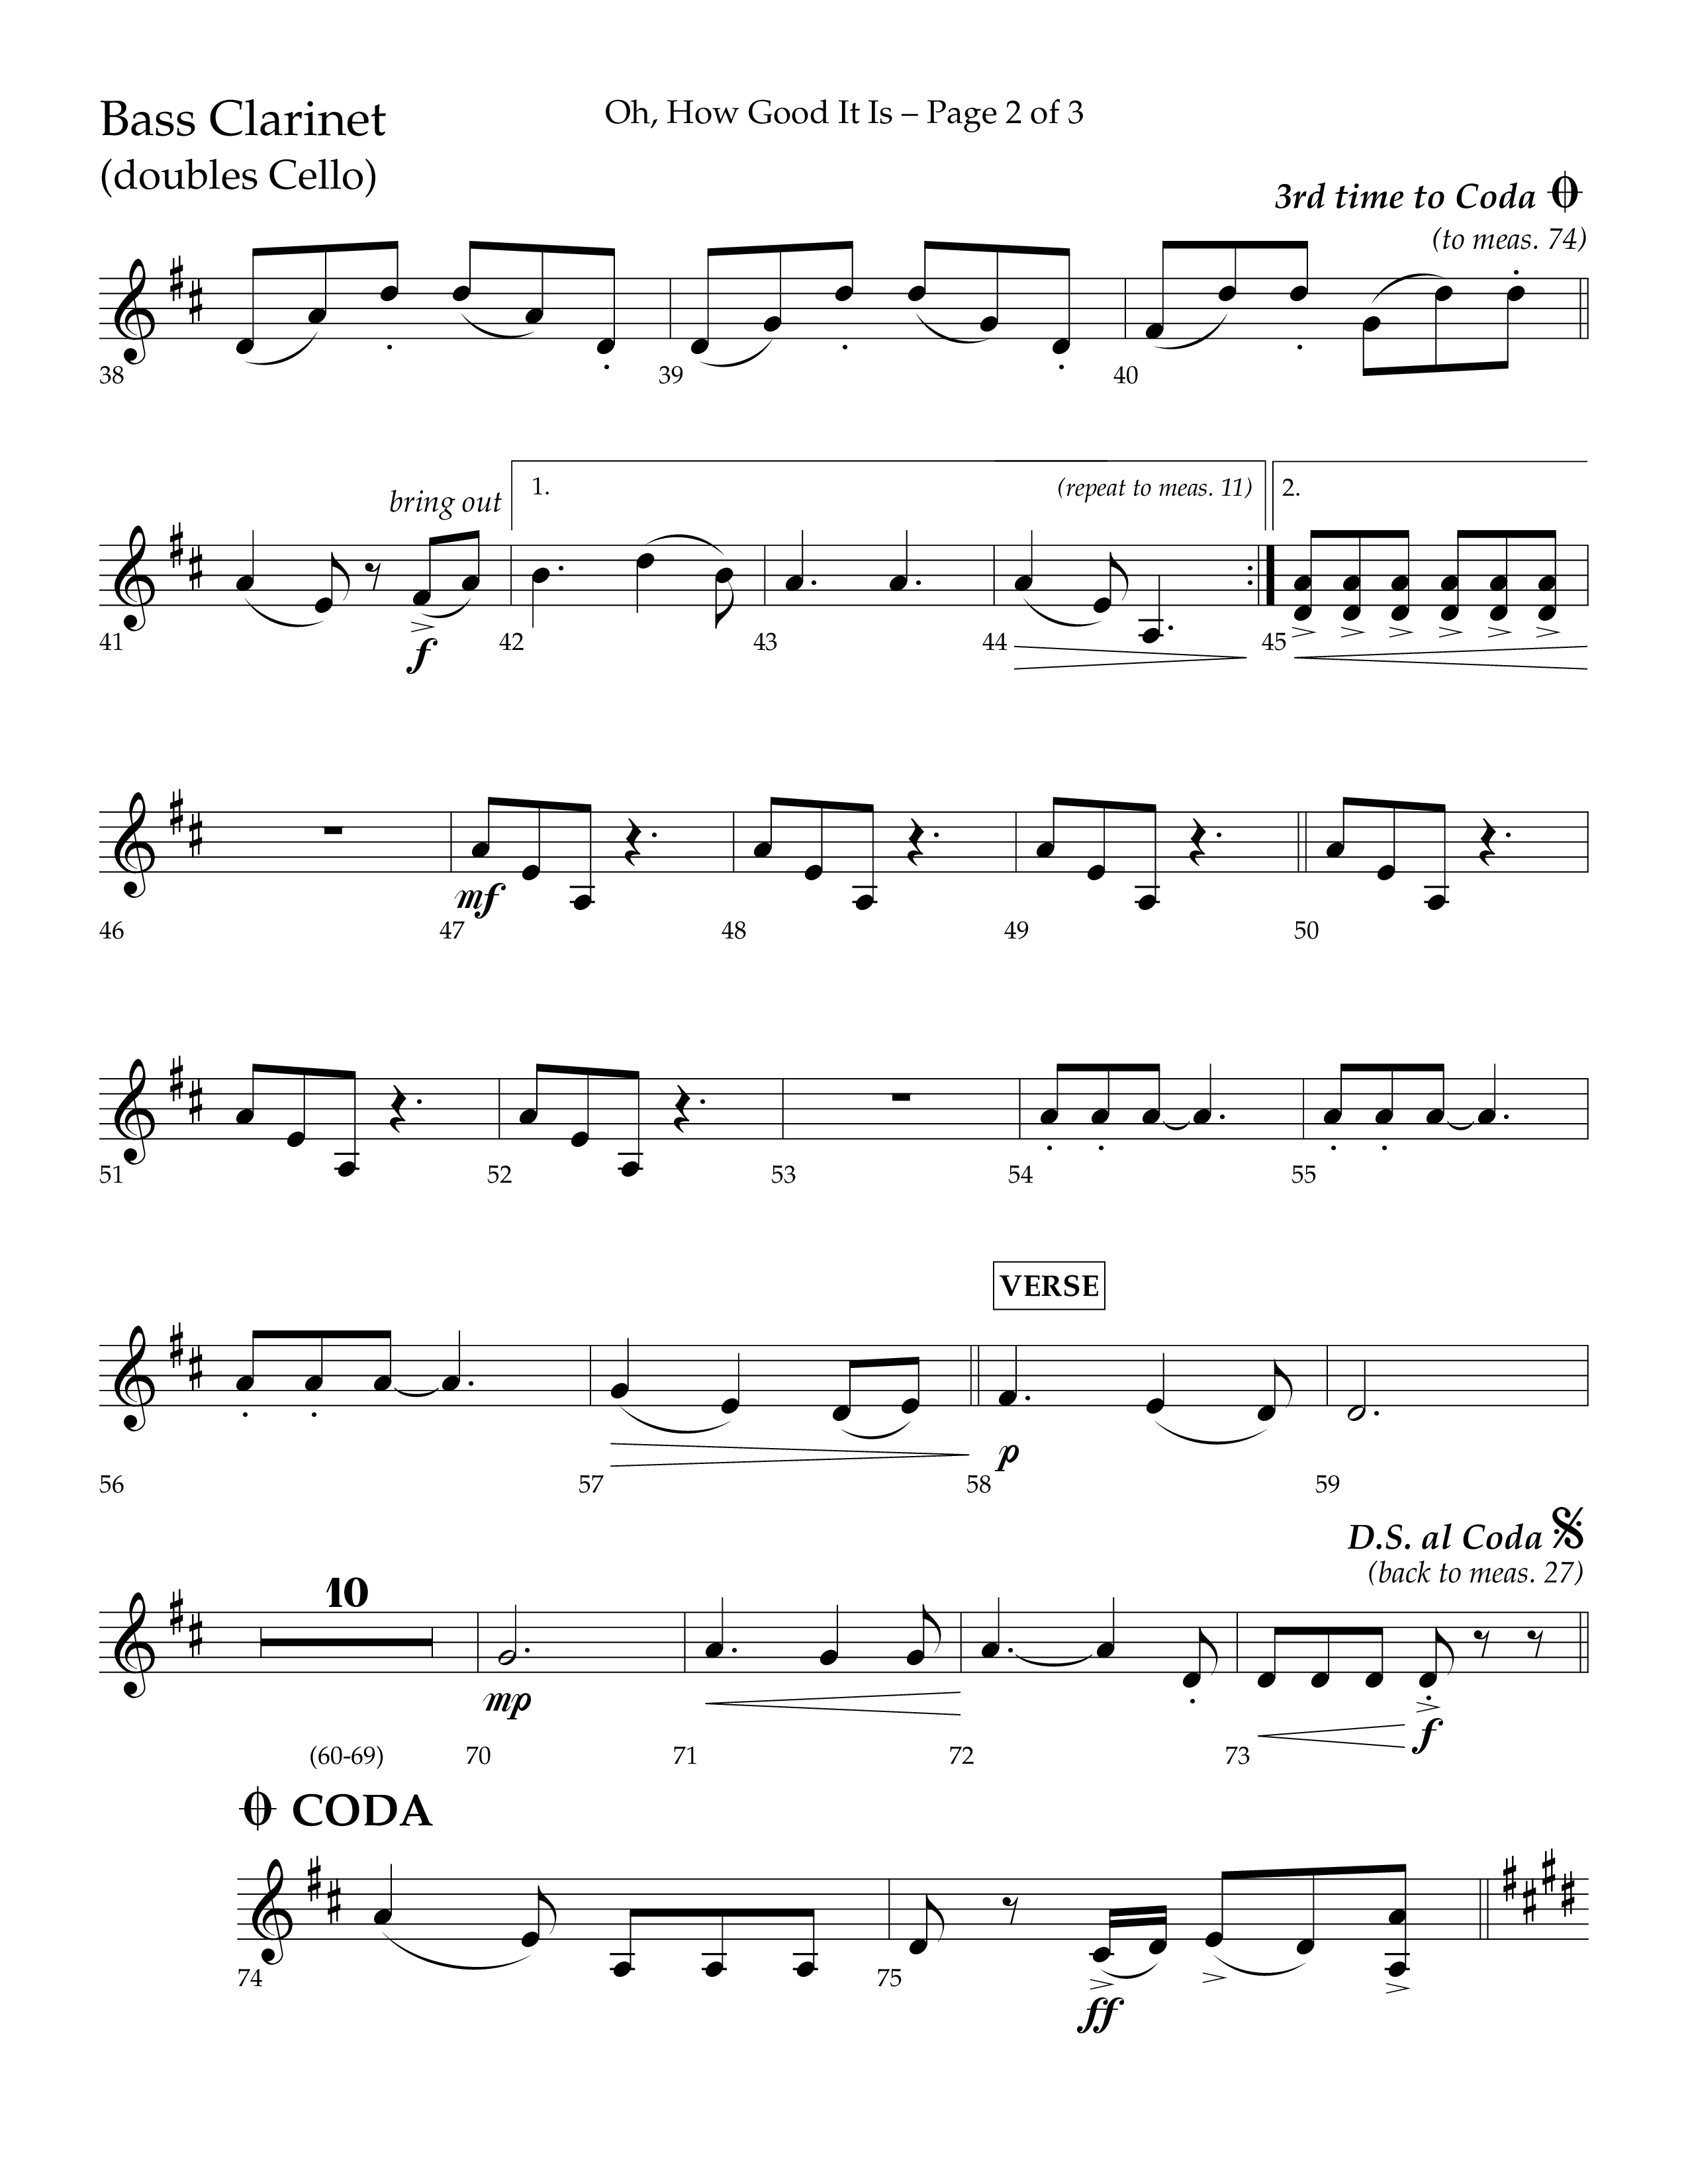 Oh How Good It Is (Choral Anthem SATB) Bass Clarinet (Lifeway Choral / Arr. David Hamilton)